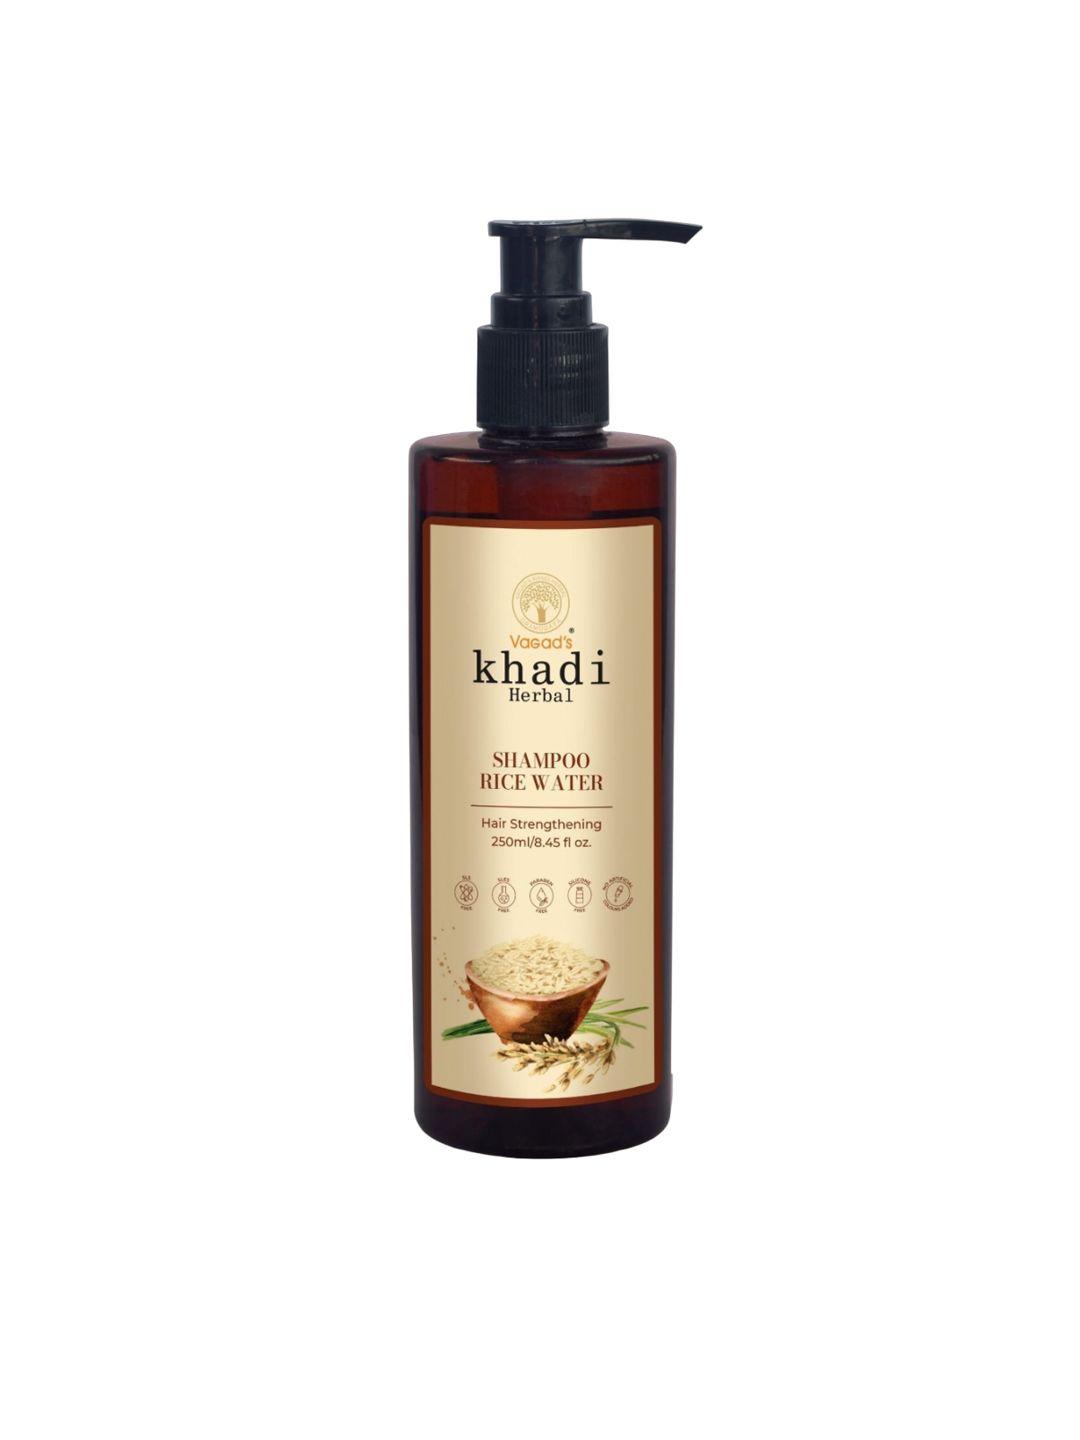 vagads herbal rice water shampoo for hair strengthening - 250ml